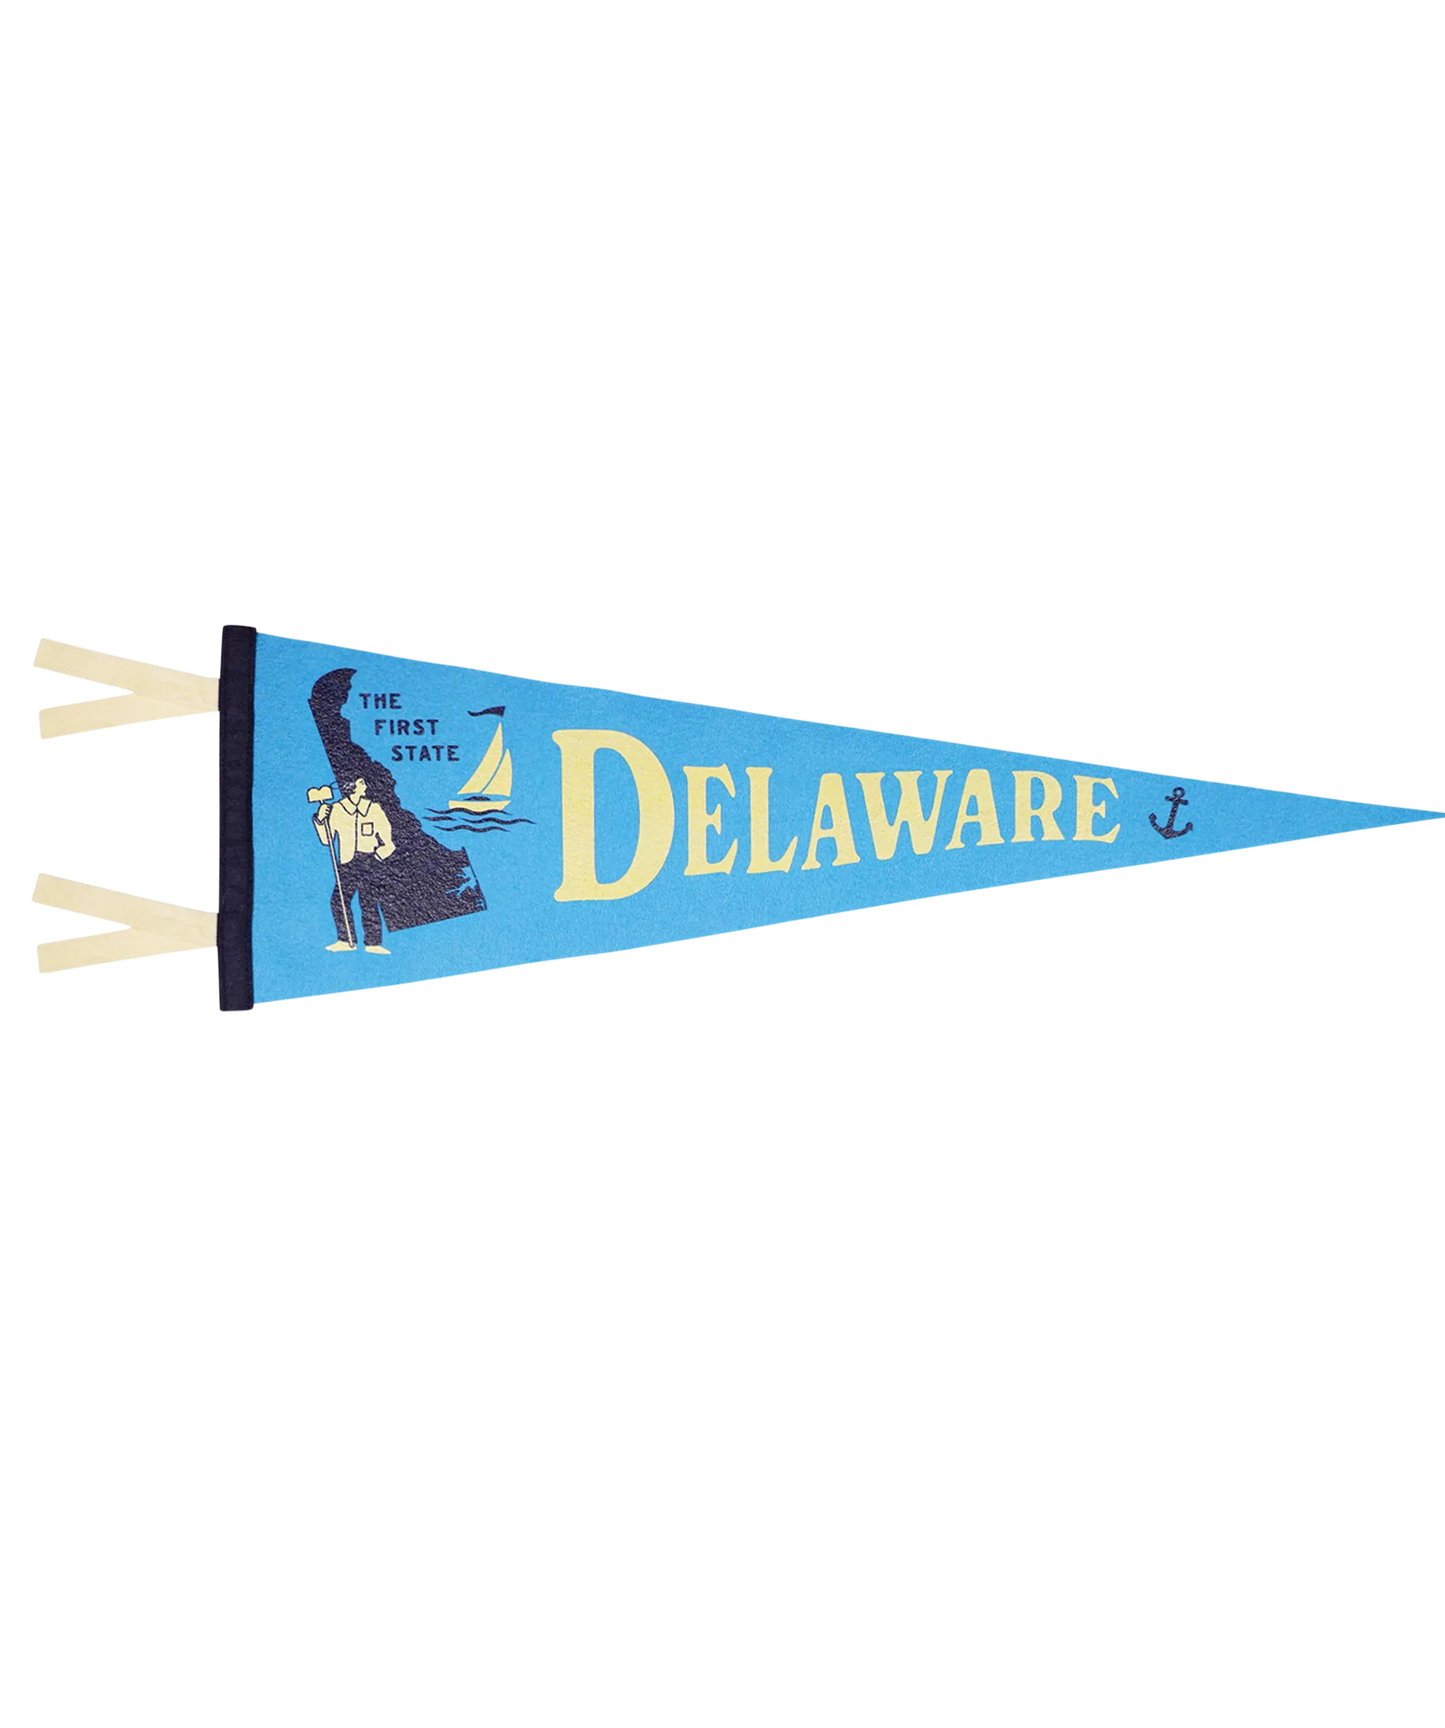 Delaware Pennant